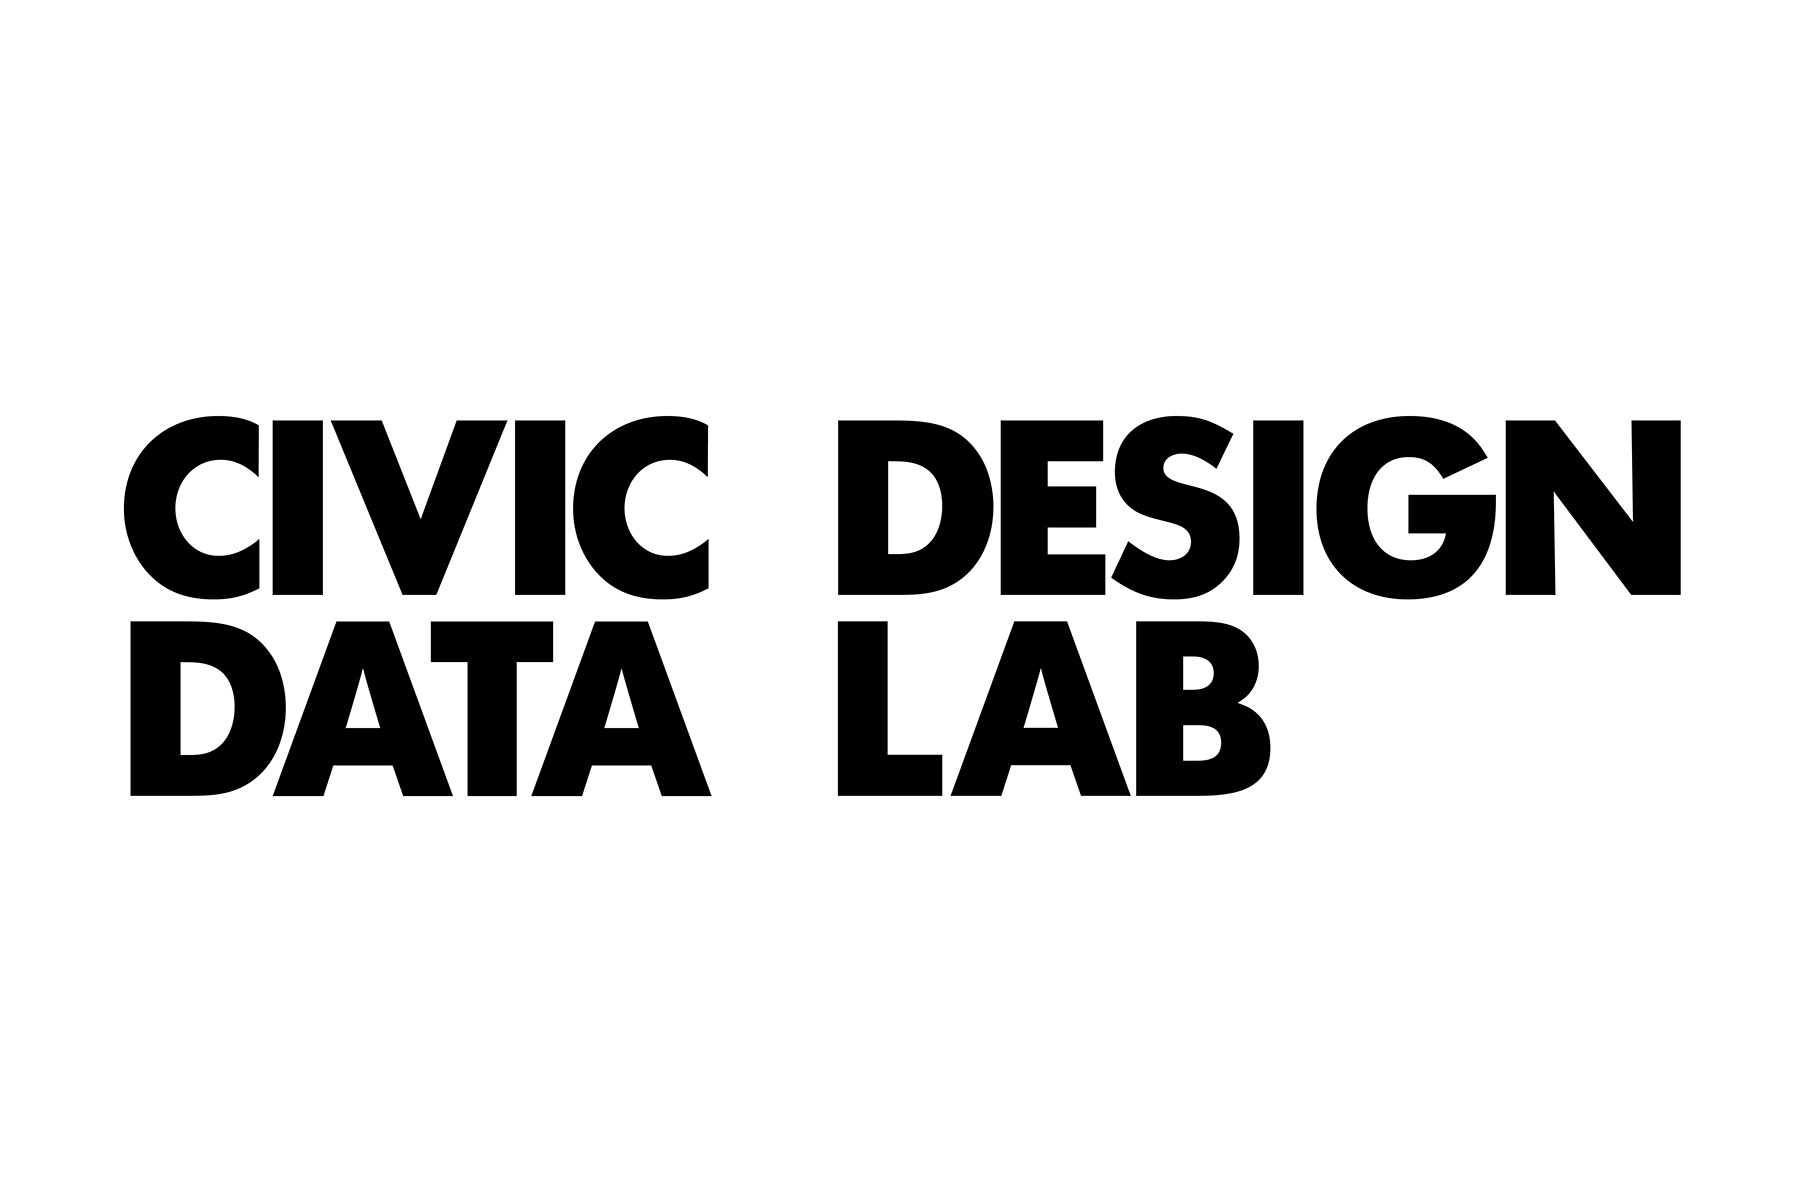 Civic Data Design Lab  - MTWTF